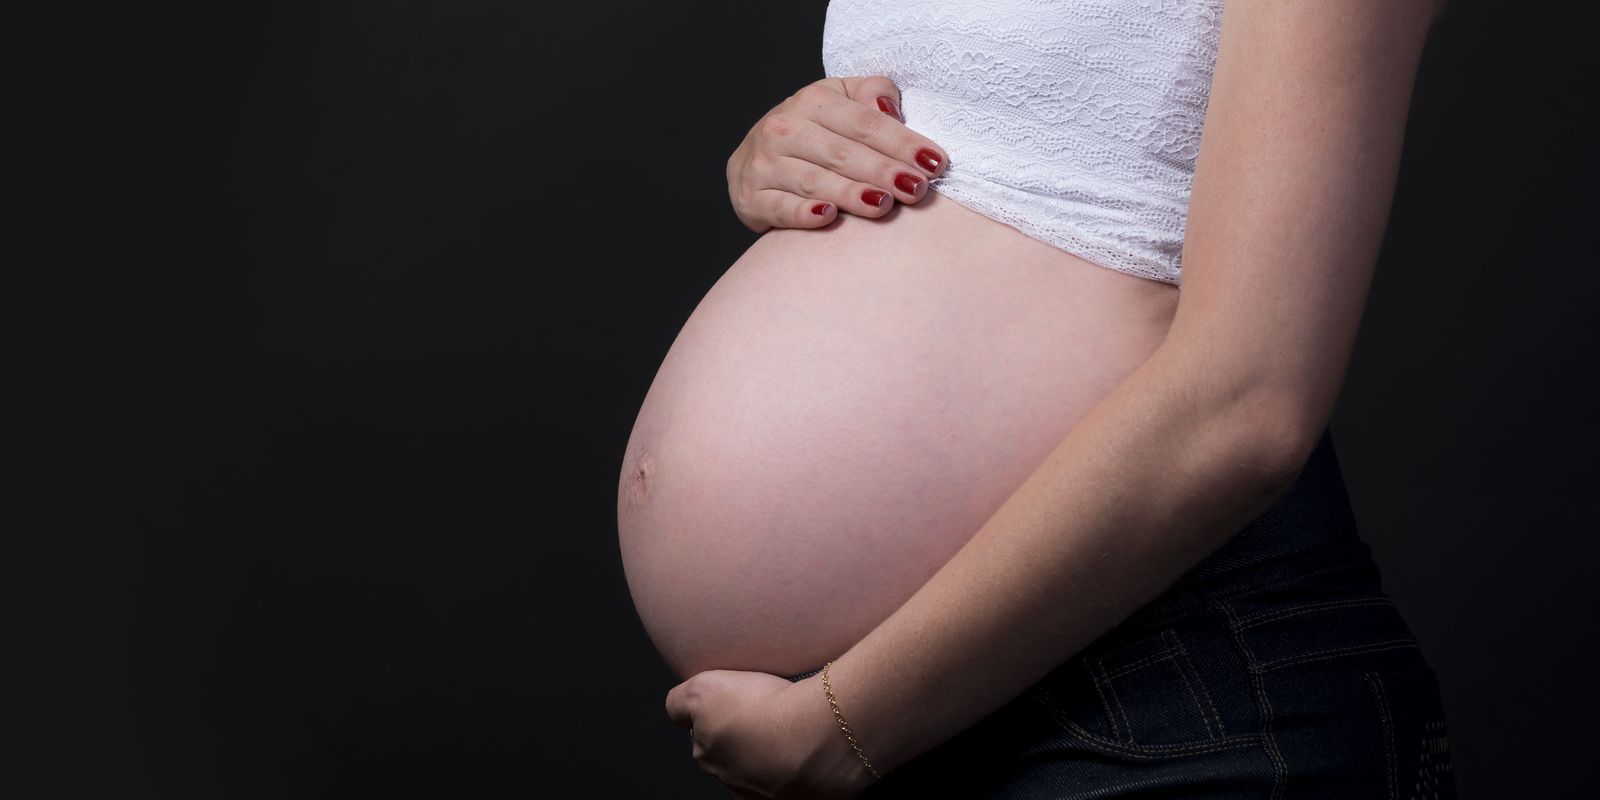 Justiça restabelece norma do CFM que proíbe assistolia fetal